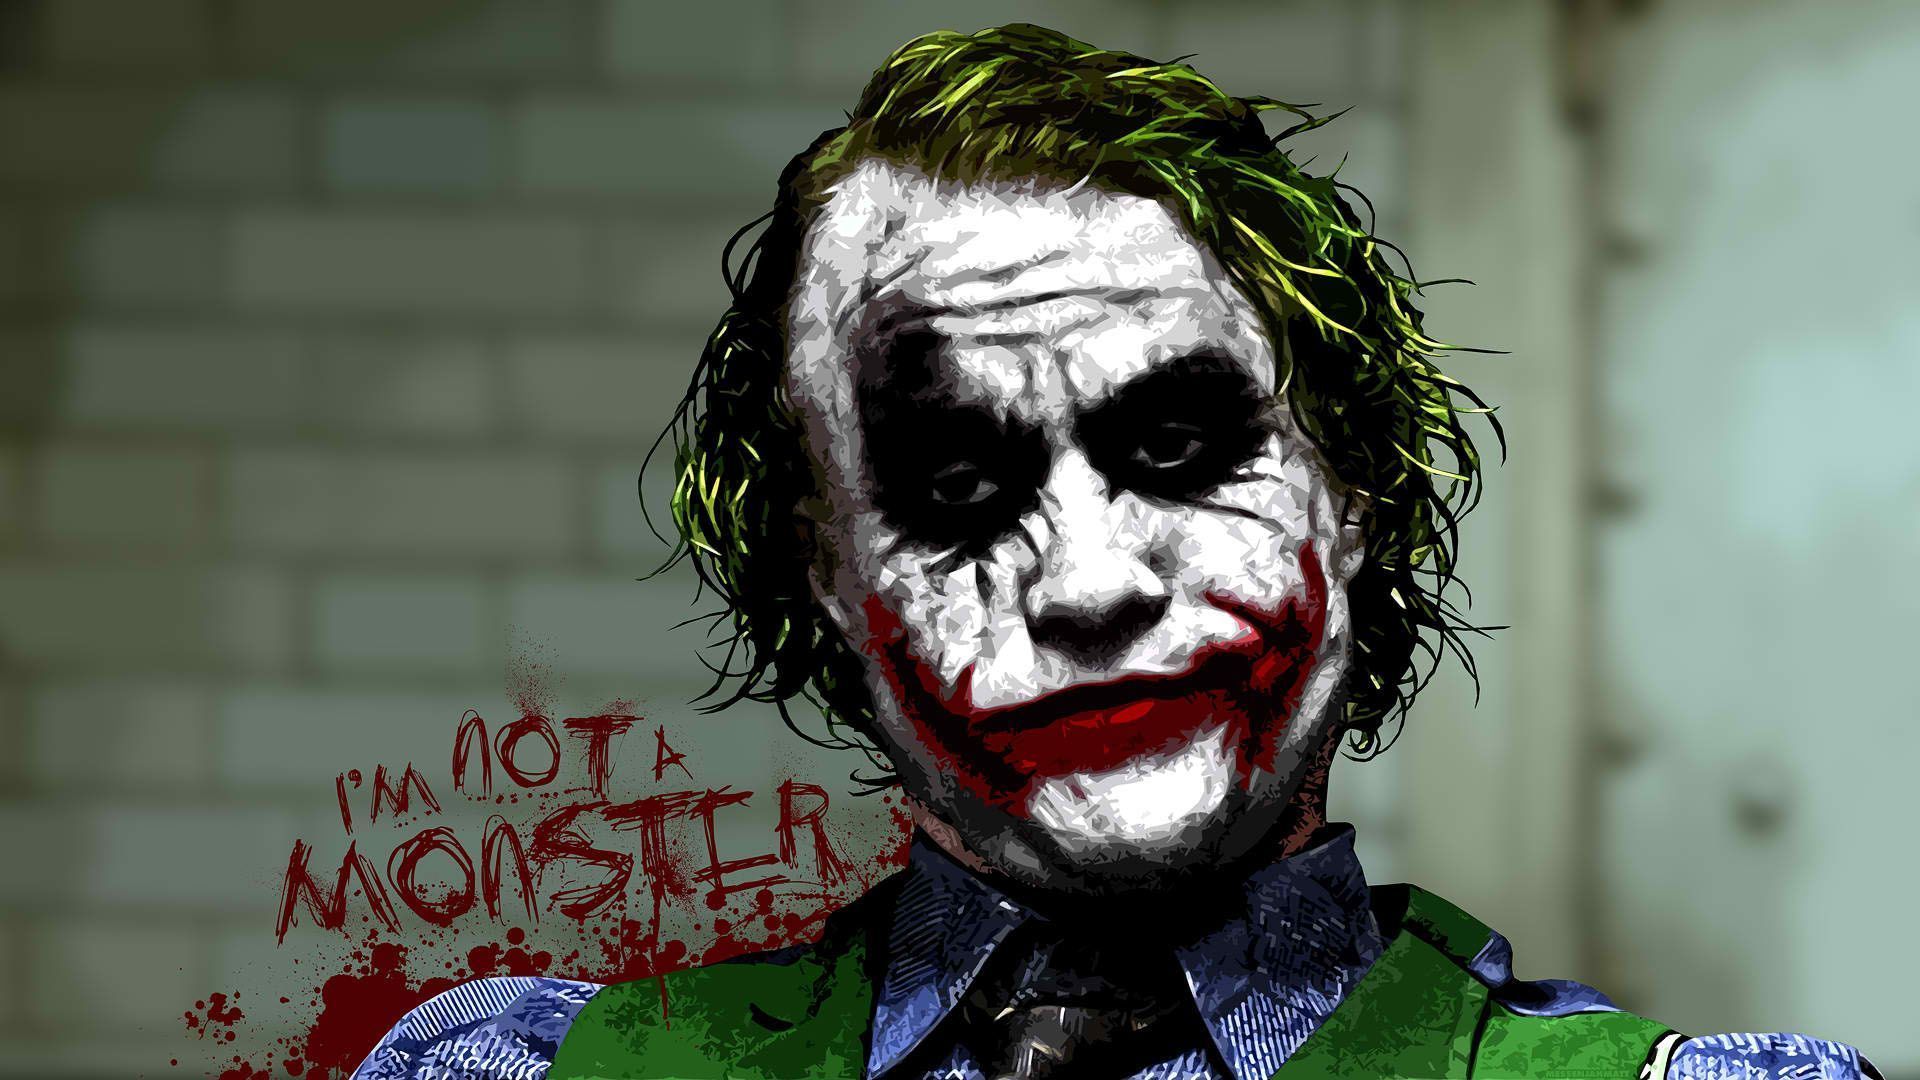 Joker Images HD - Wallpaper Cave